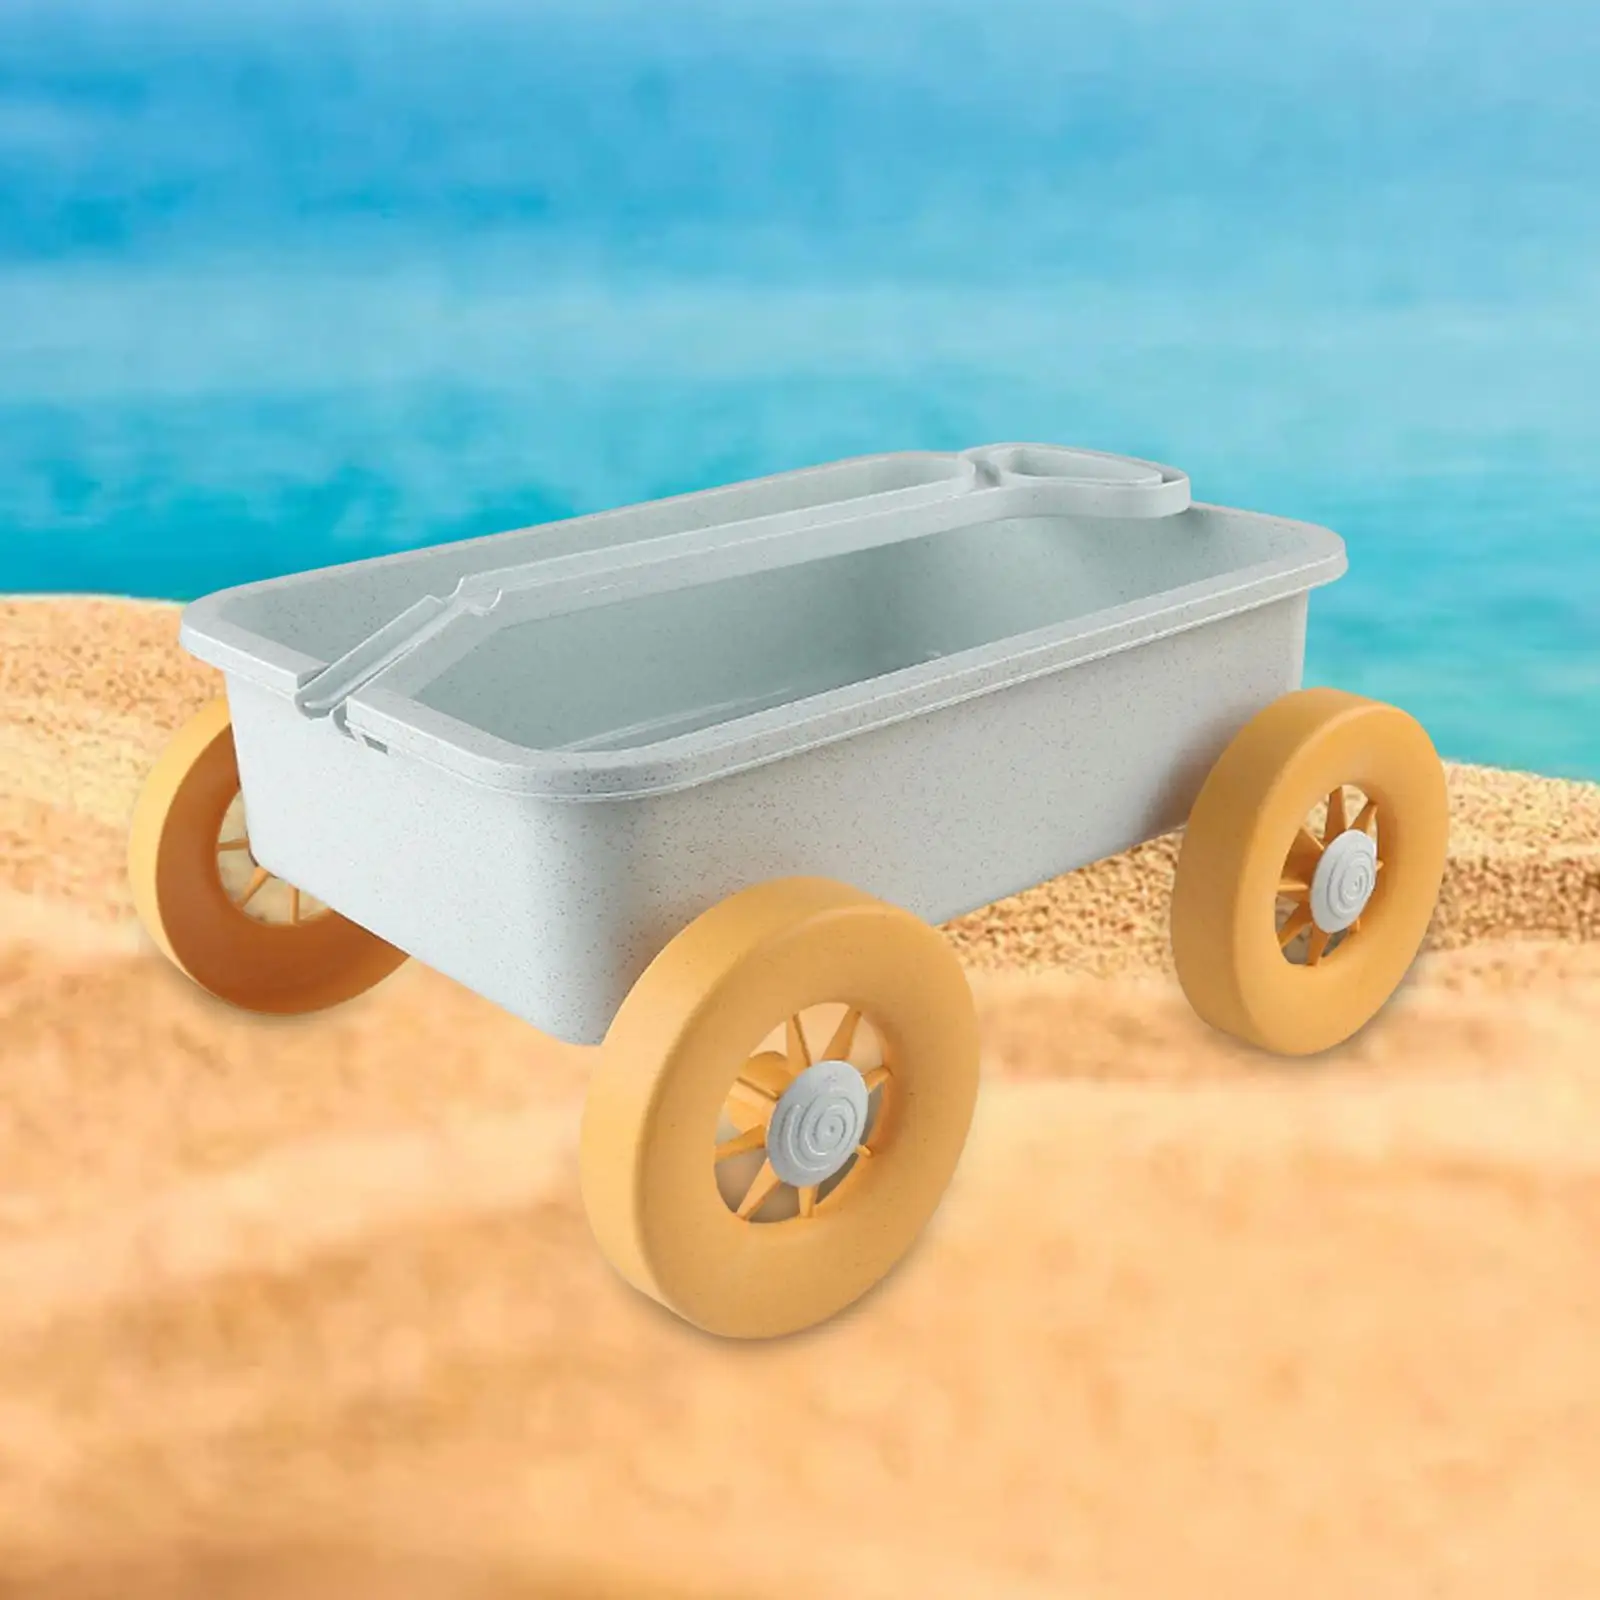 Small Wagon Toys Beach Toys Vehicle Outdoor Game Wagon Garden Wagon Tools Toy Wheelbarrow for Stuffed Animals